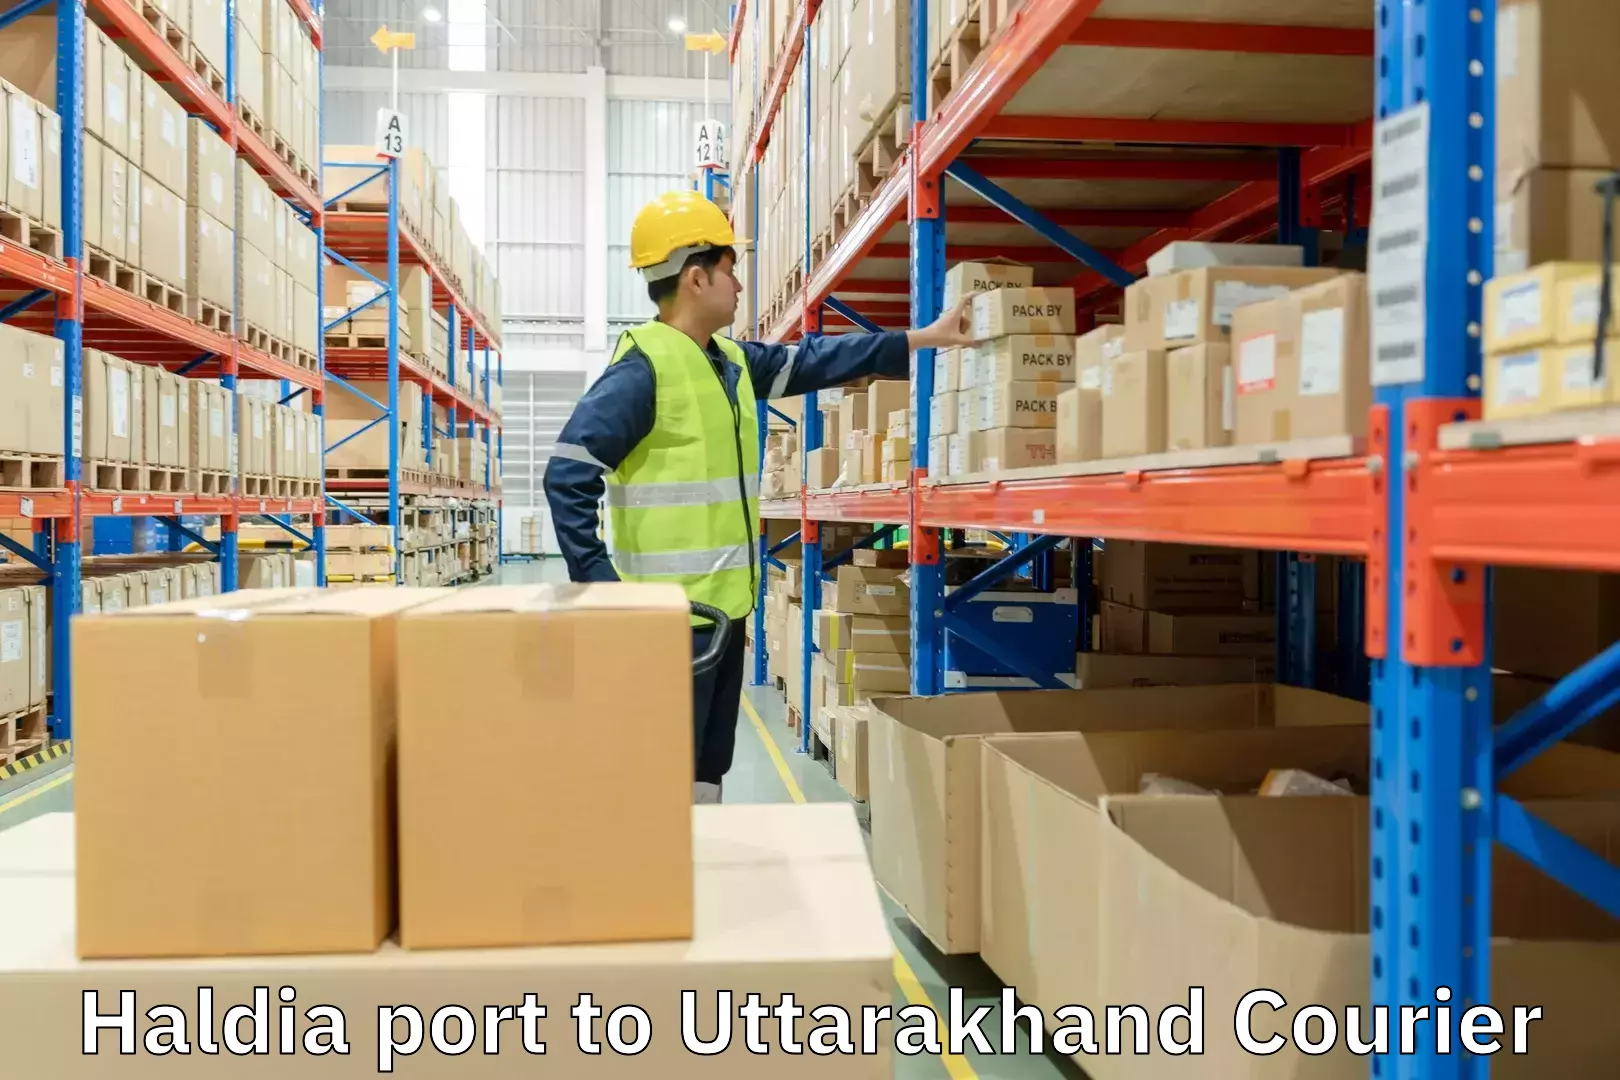 Expedited shipping methods Haldia port to Uttarakhand